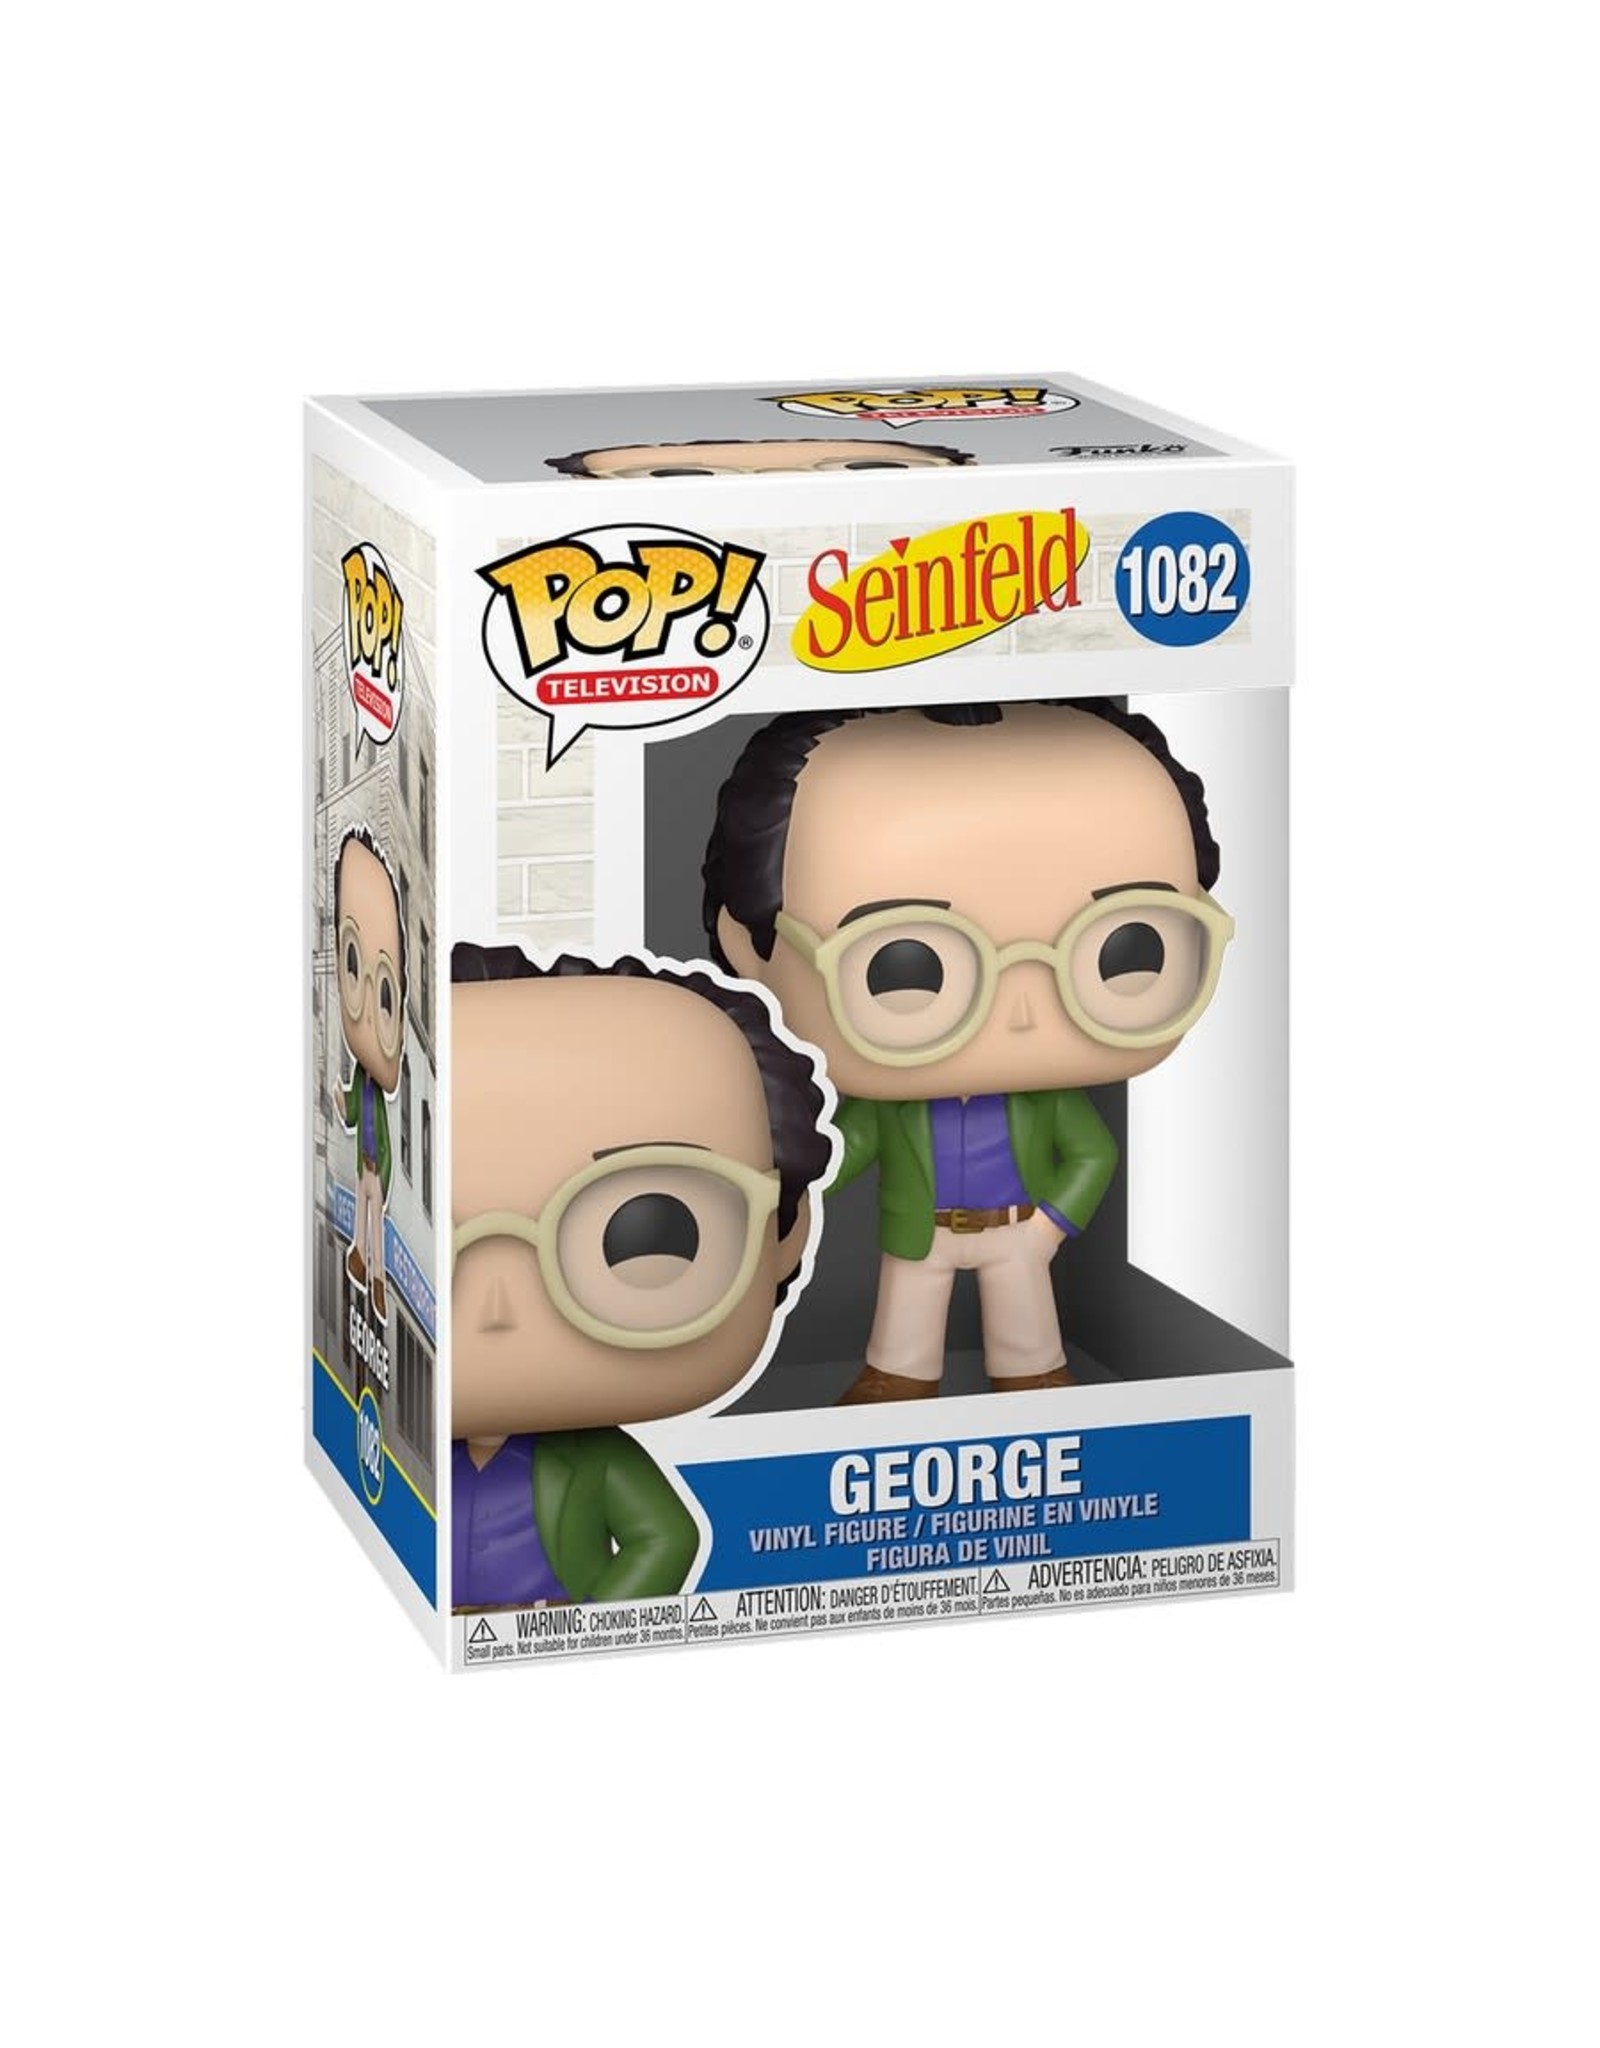 Funko Pop! Funko Pop! Television nr1082 Seinfeld - George